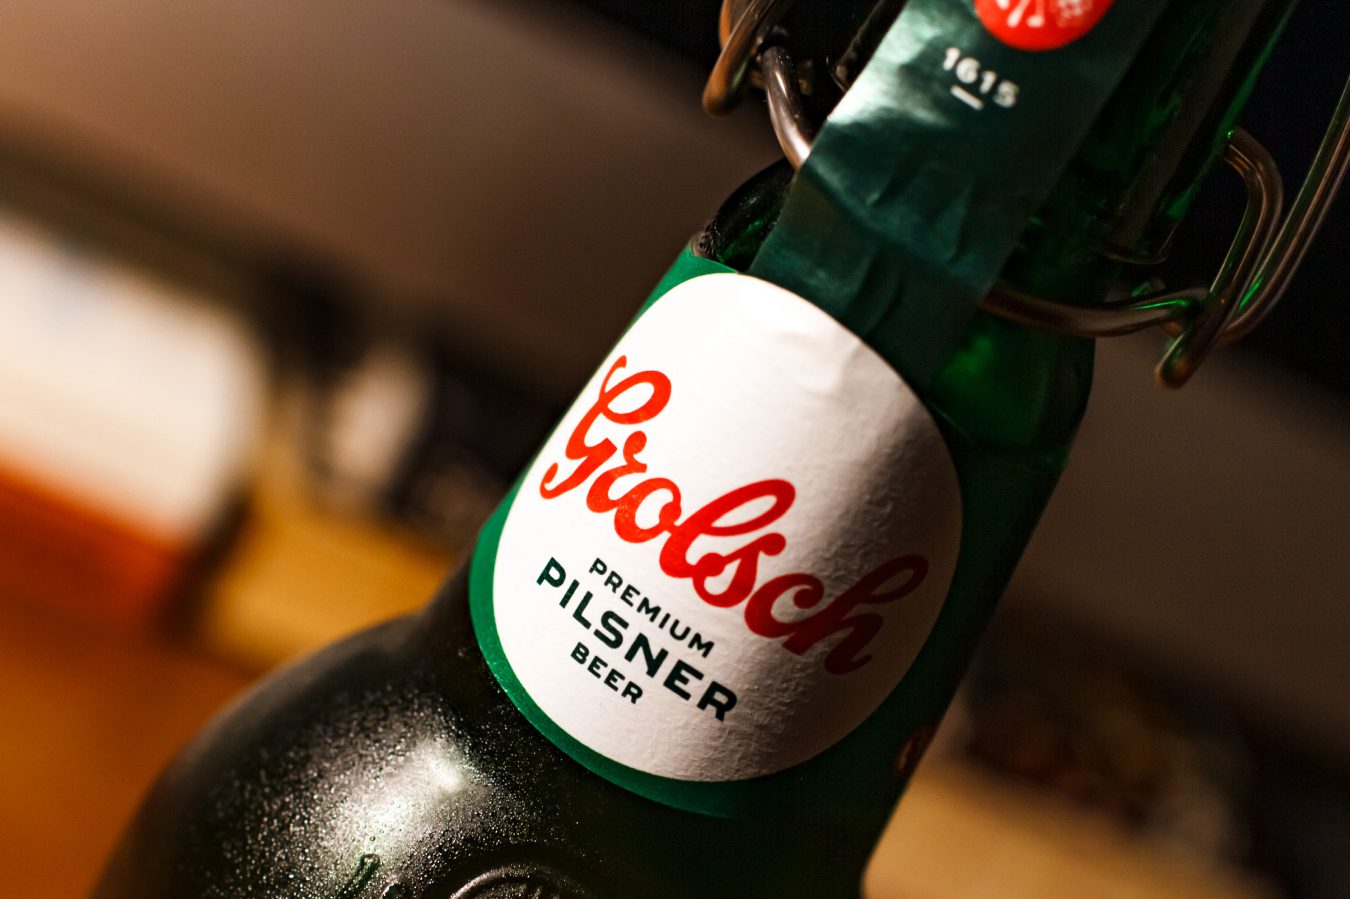 AS I AM”というブランドのメッセージ通り、”らしさ”を貫いているビール。 | A BEER AFTER WORK